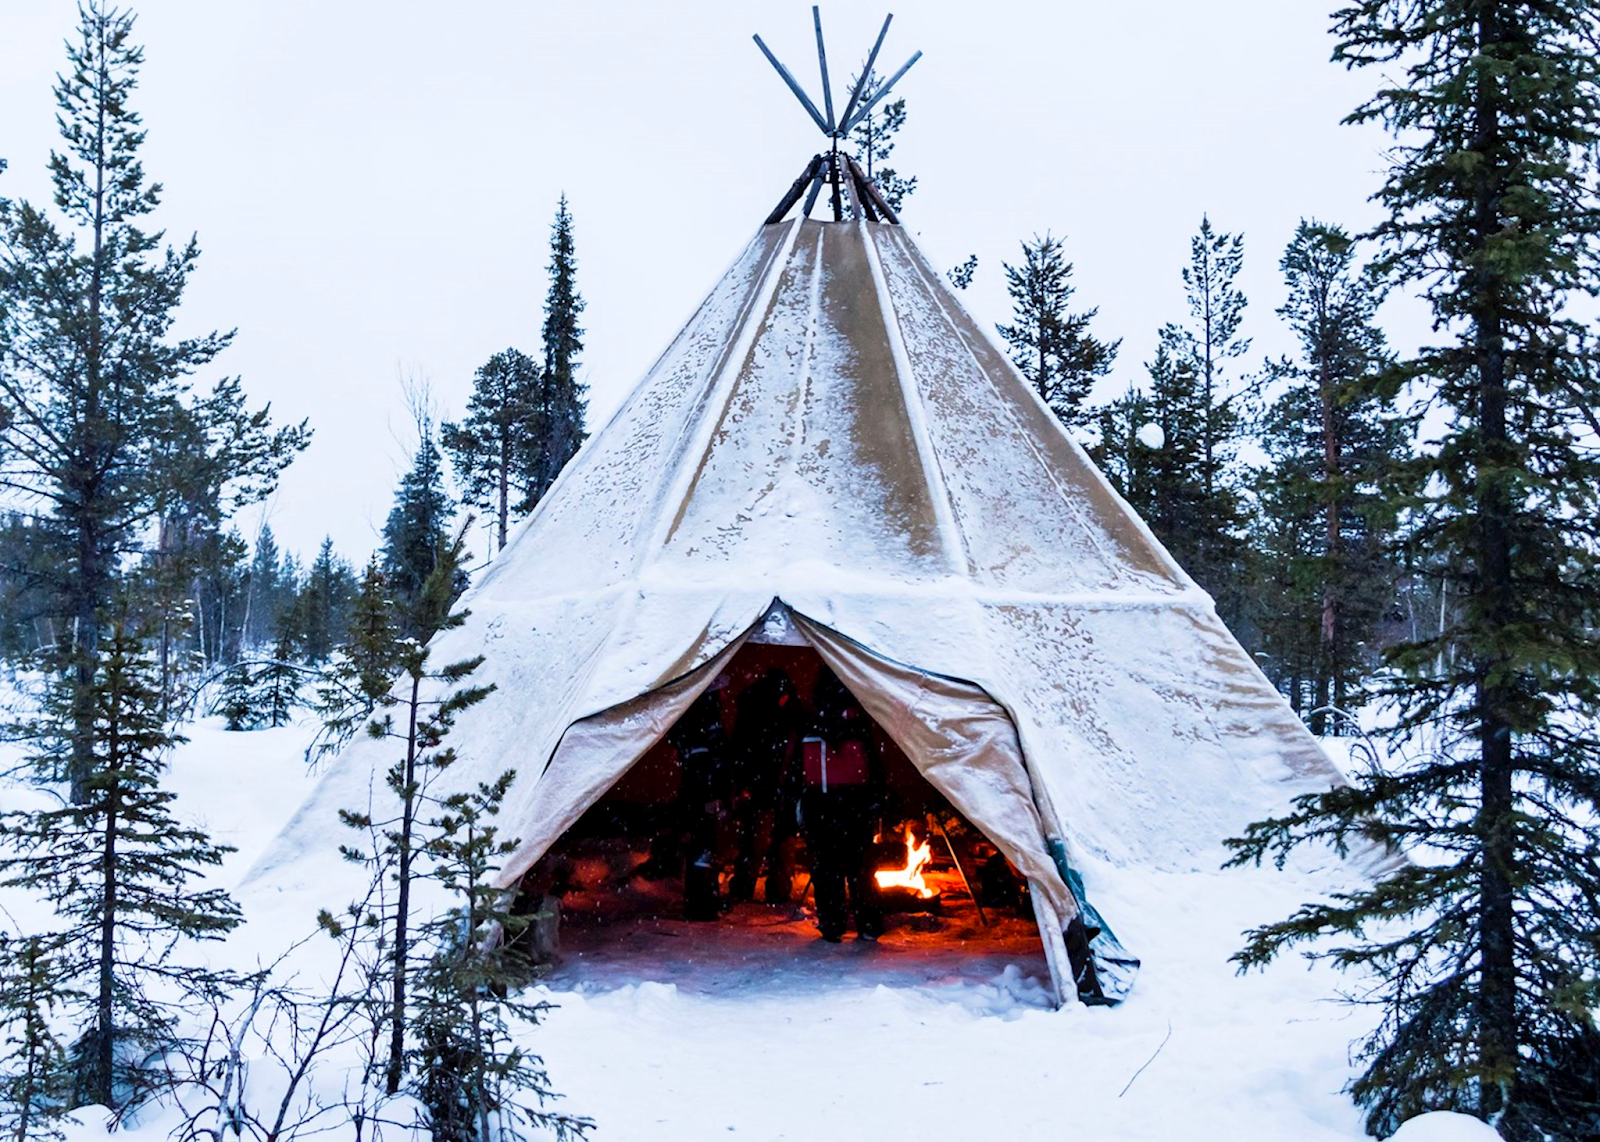 A more modern version of a Sami tent.